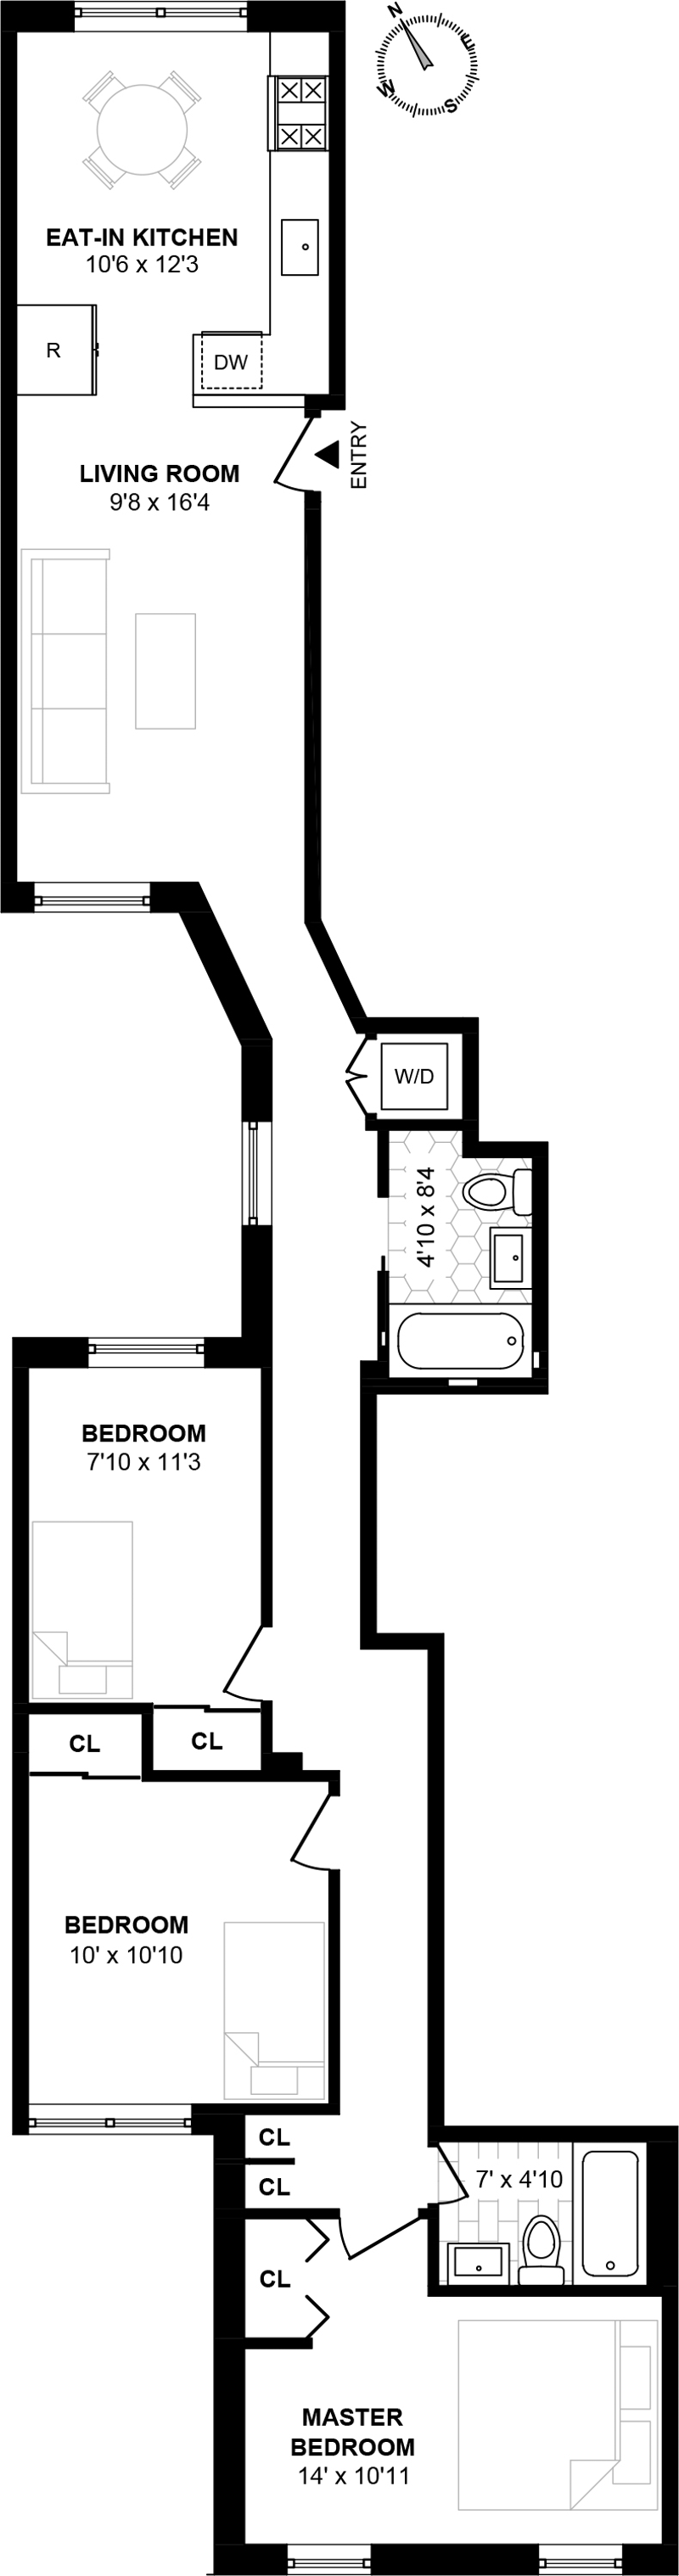 Floorplan for 376 Saint Johns Place